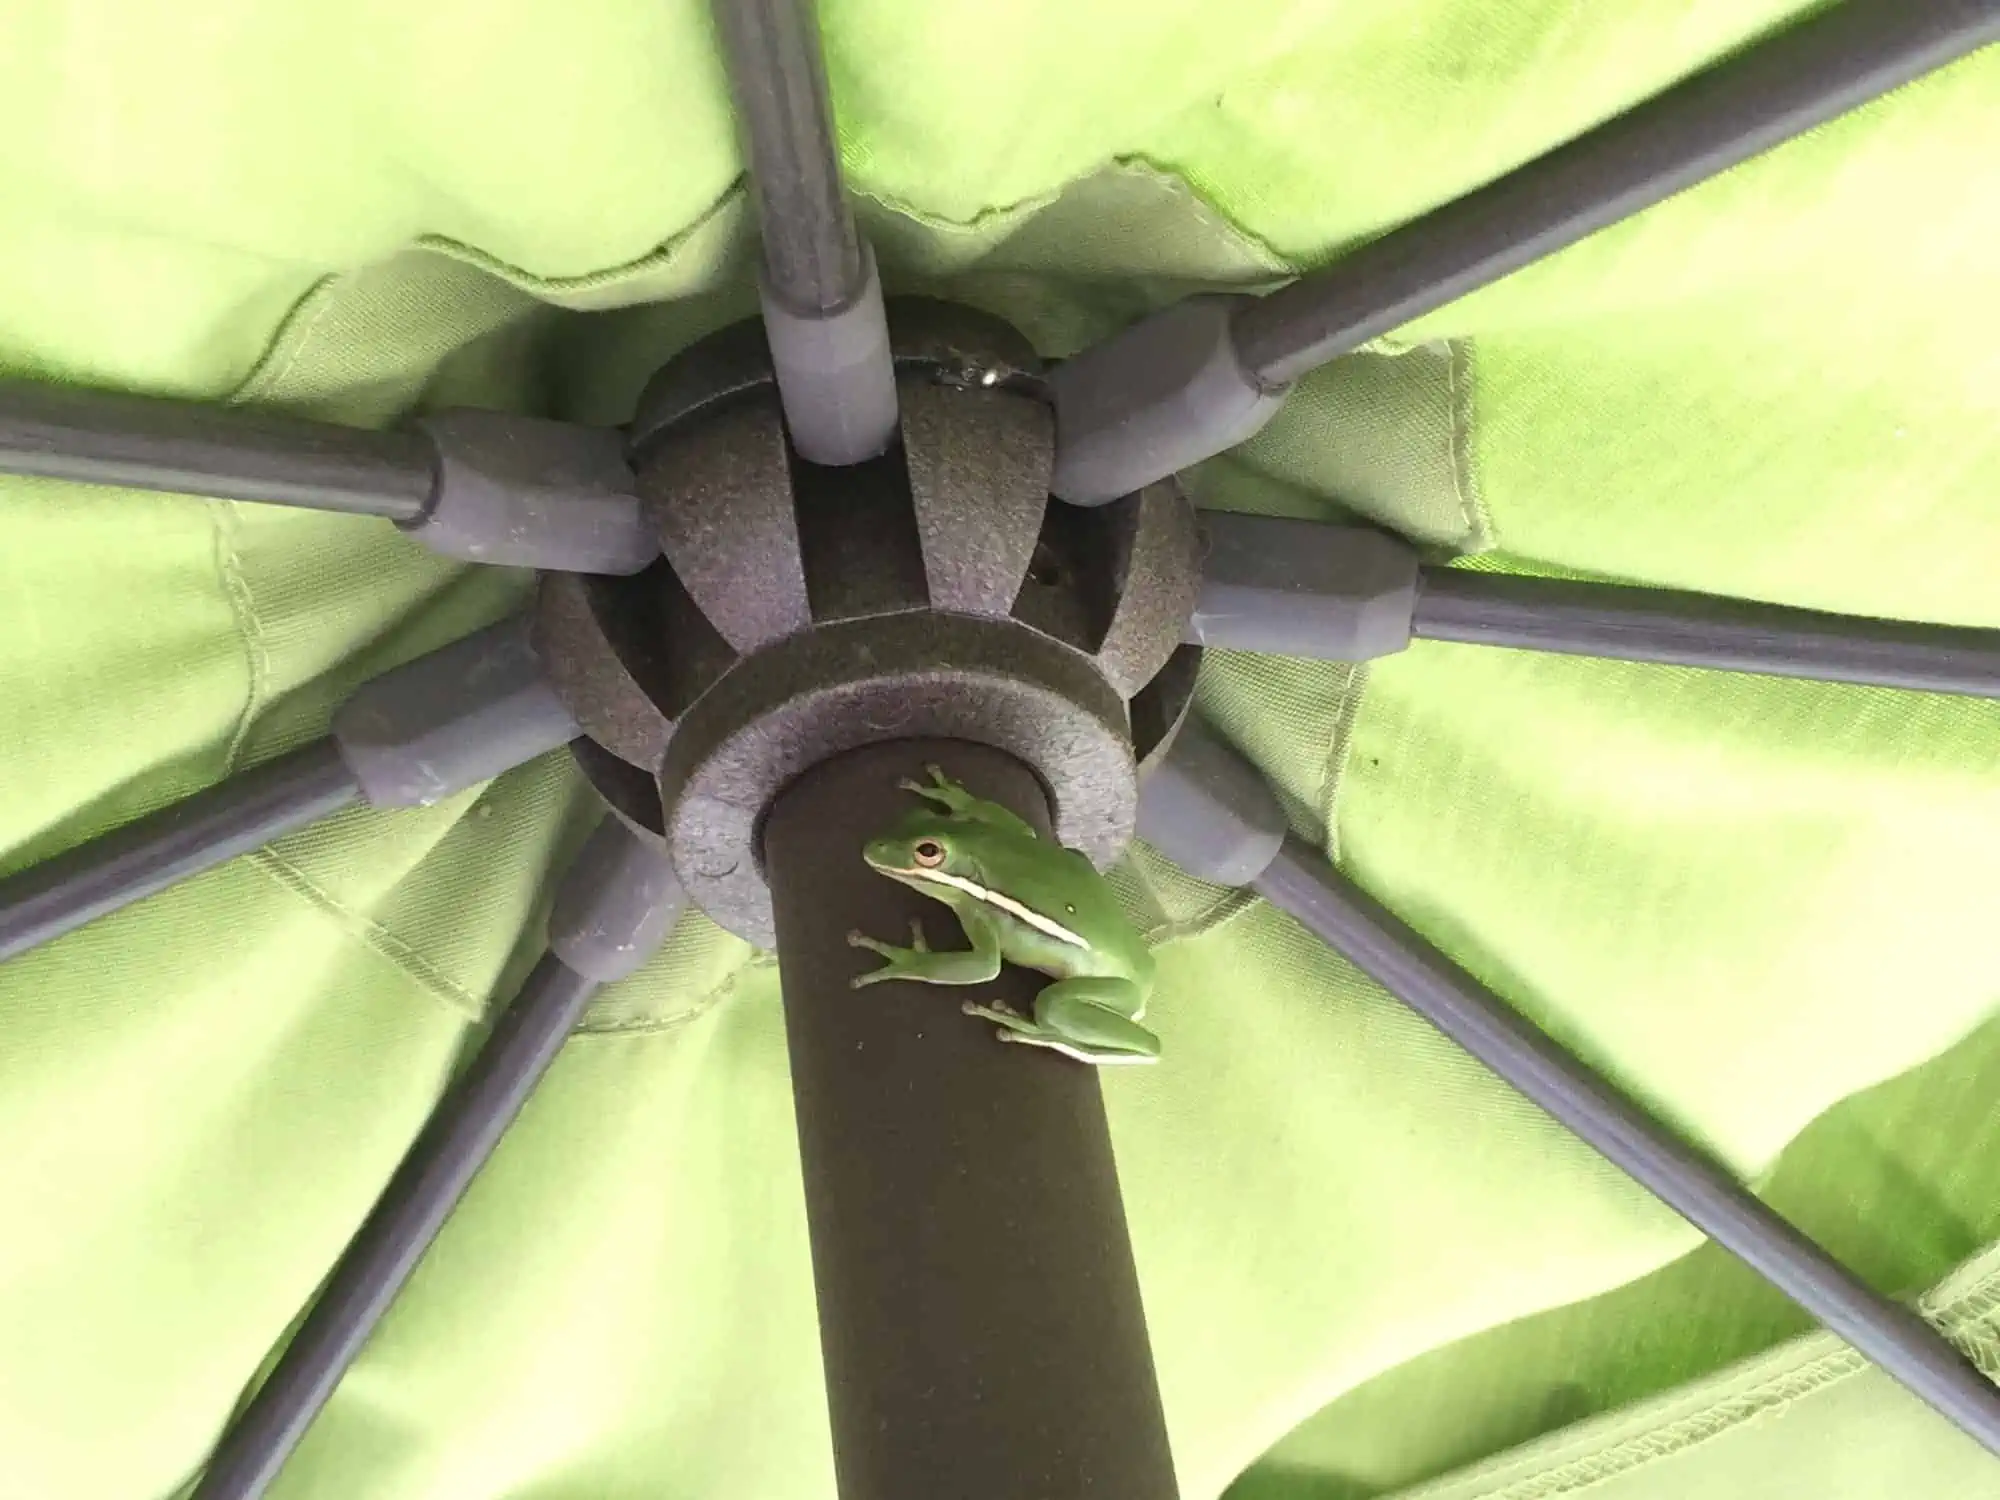 Green tree frog on a green patio umbrella